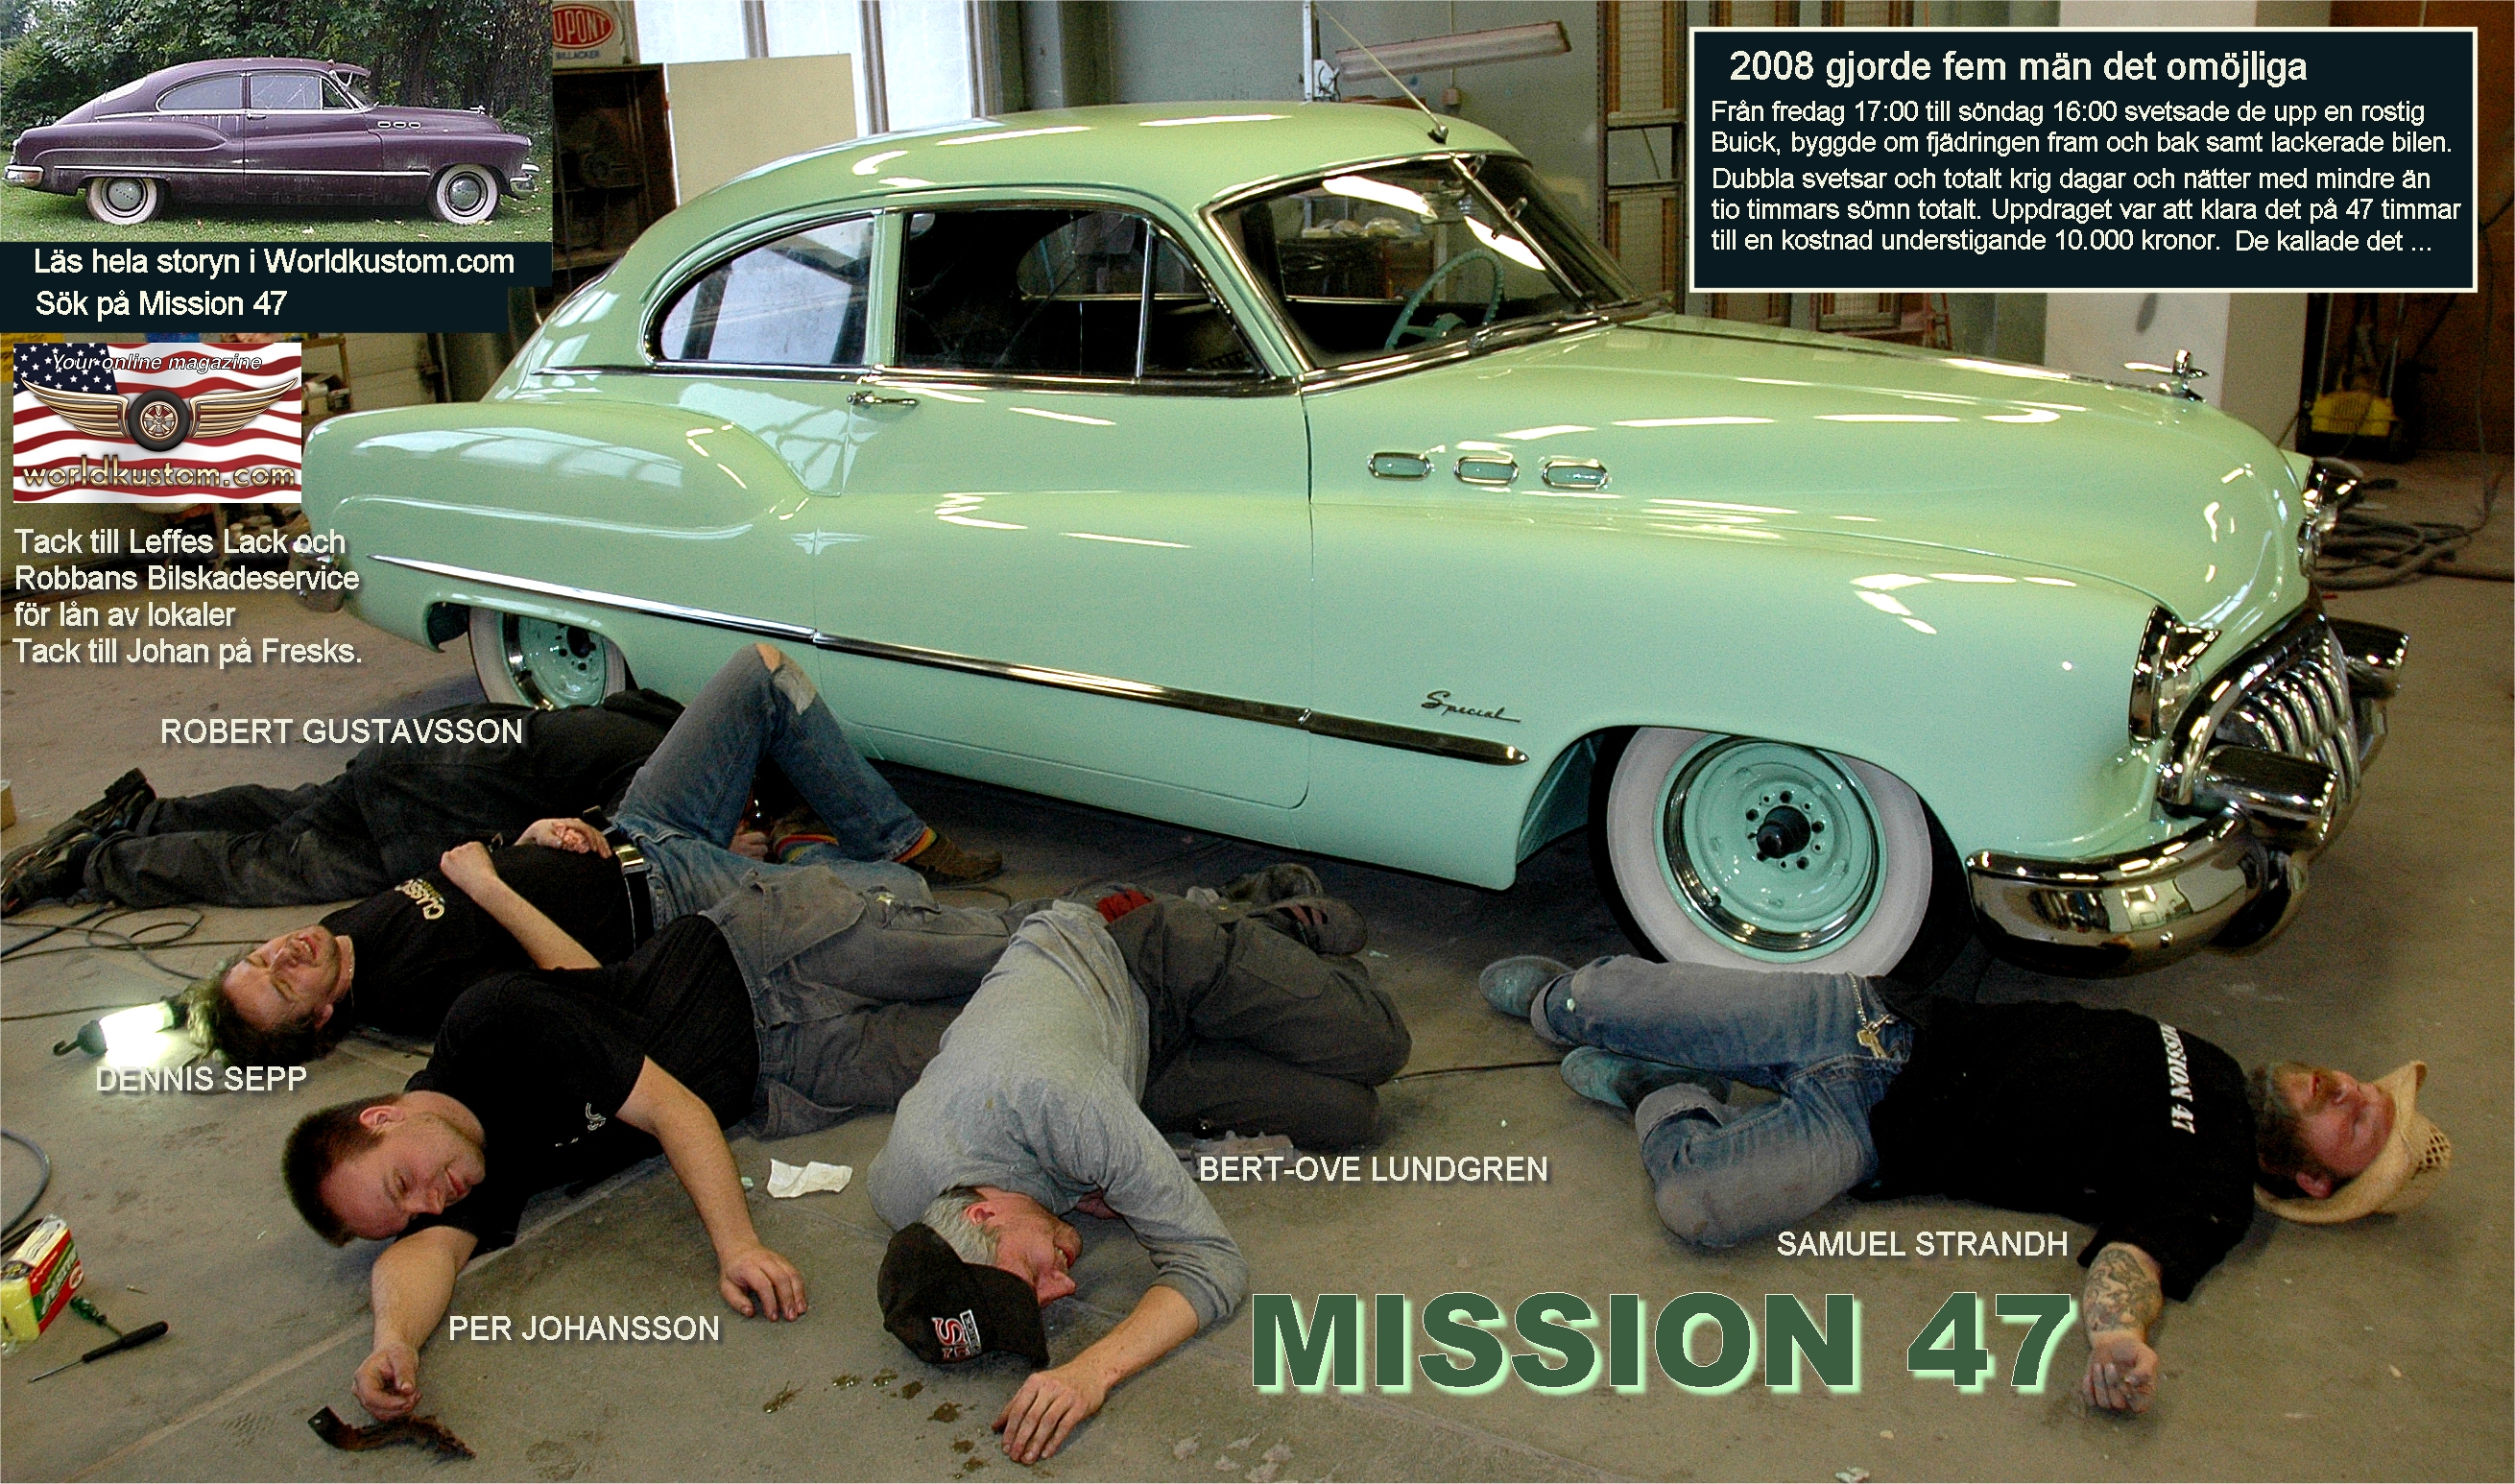 Mission 47 banderoll